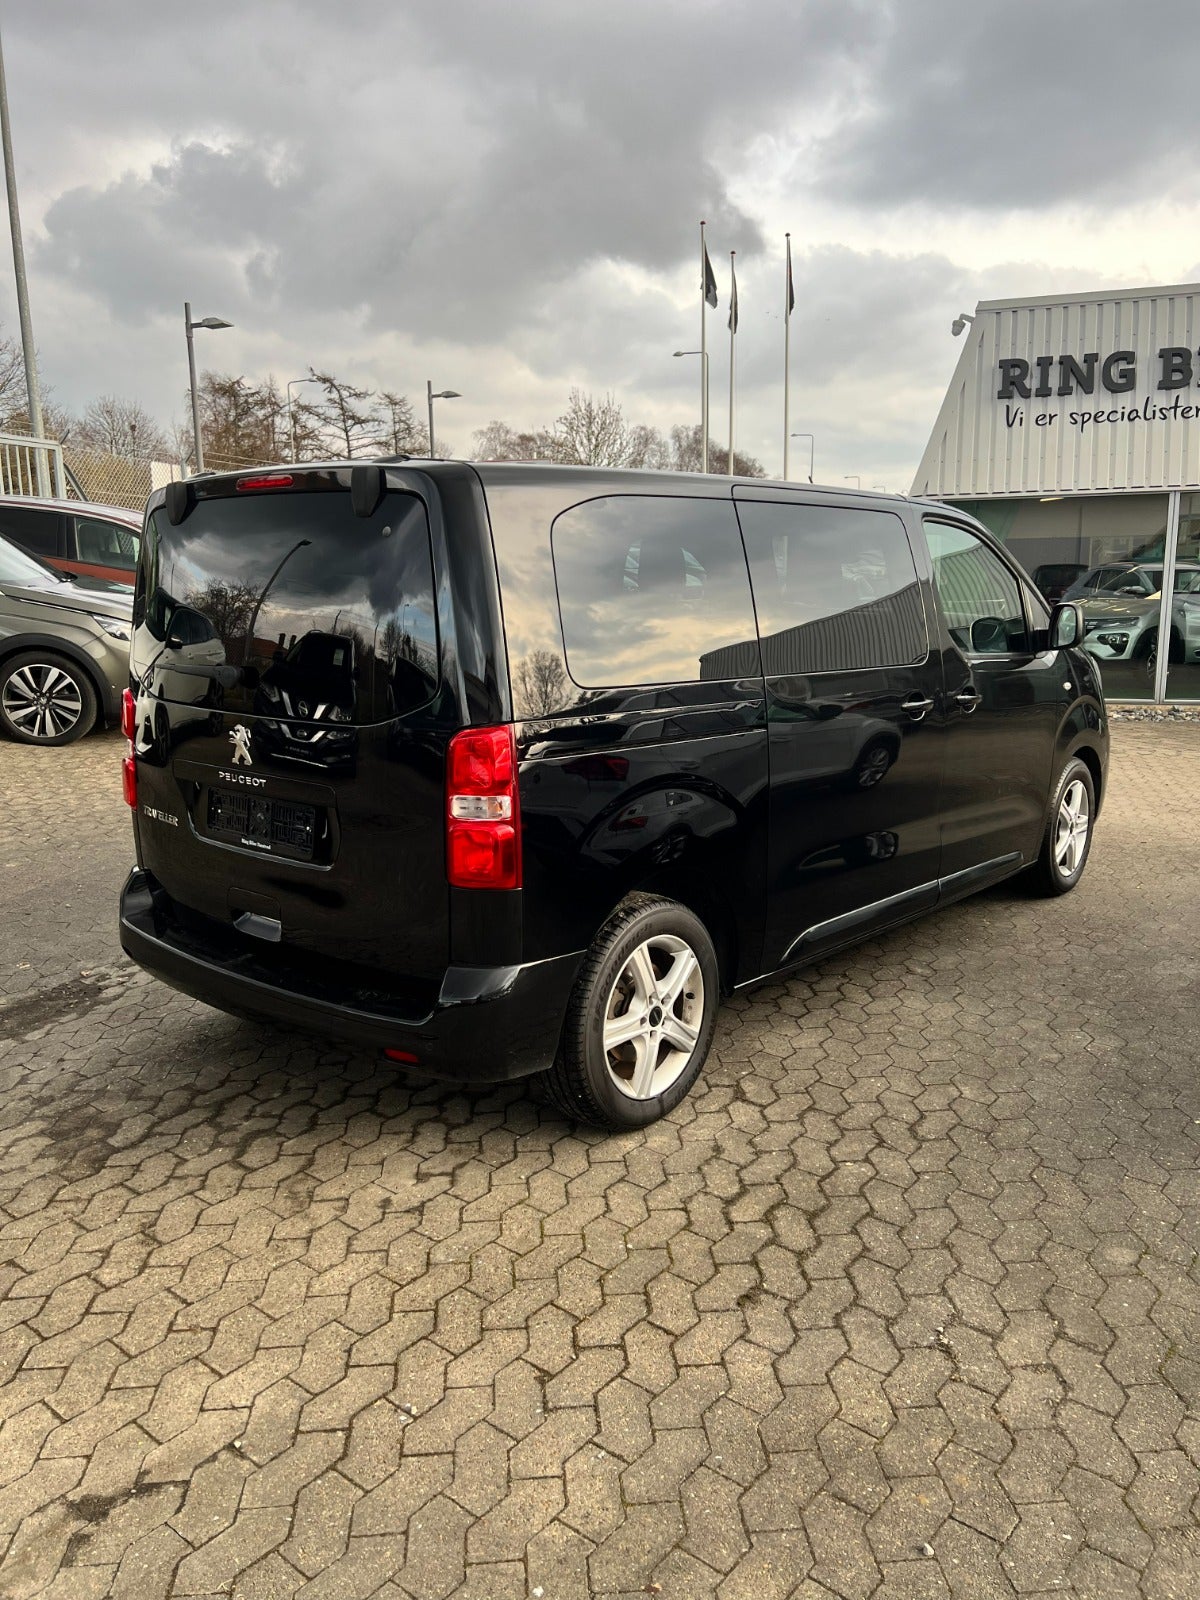 Peugeot Traveller 2019